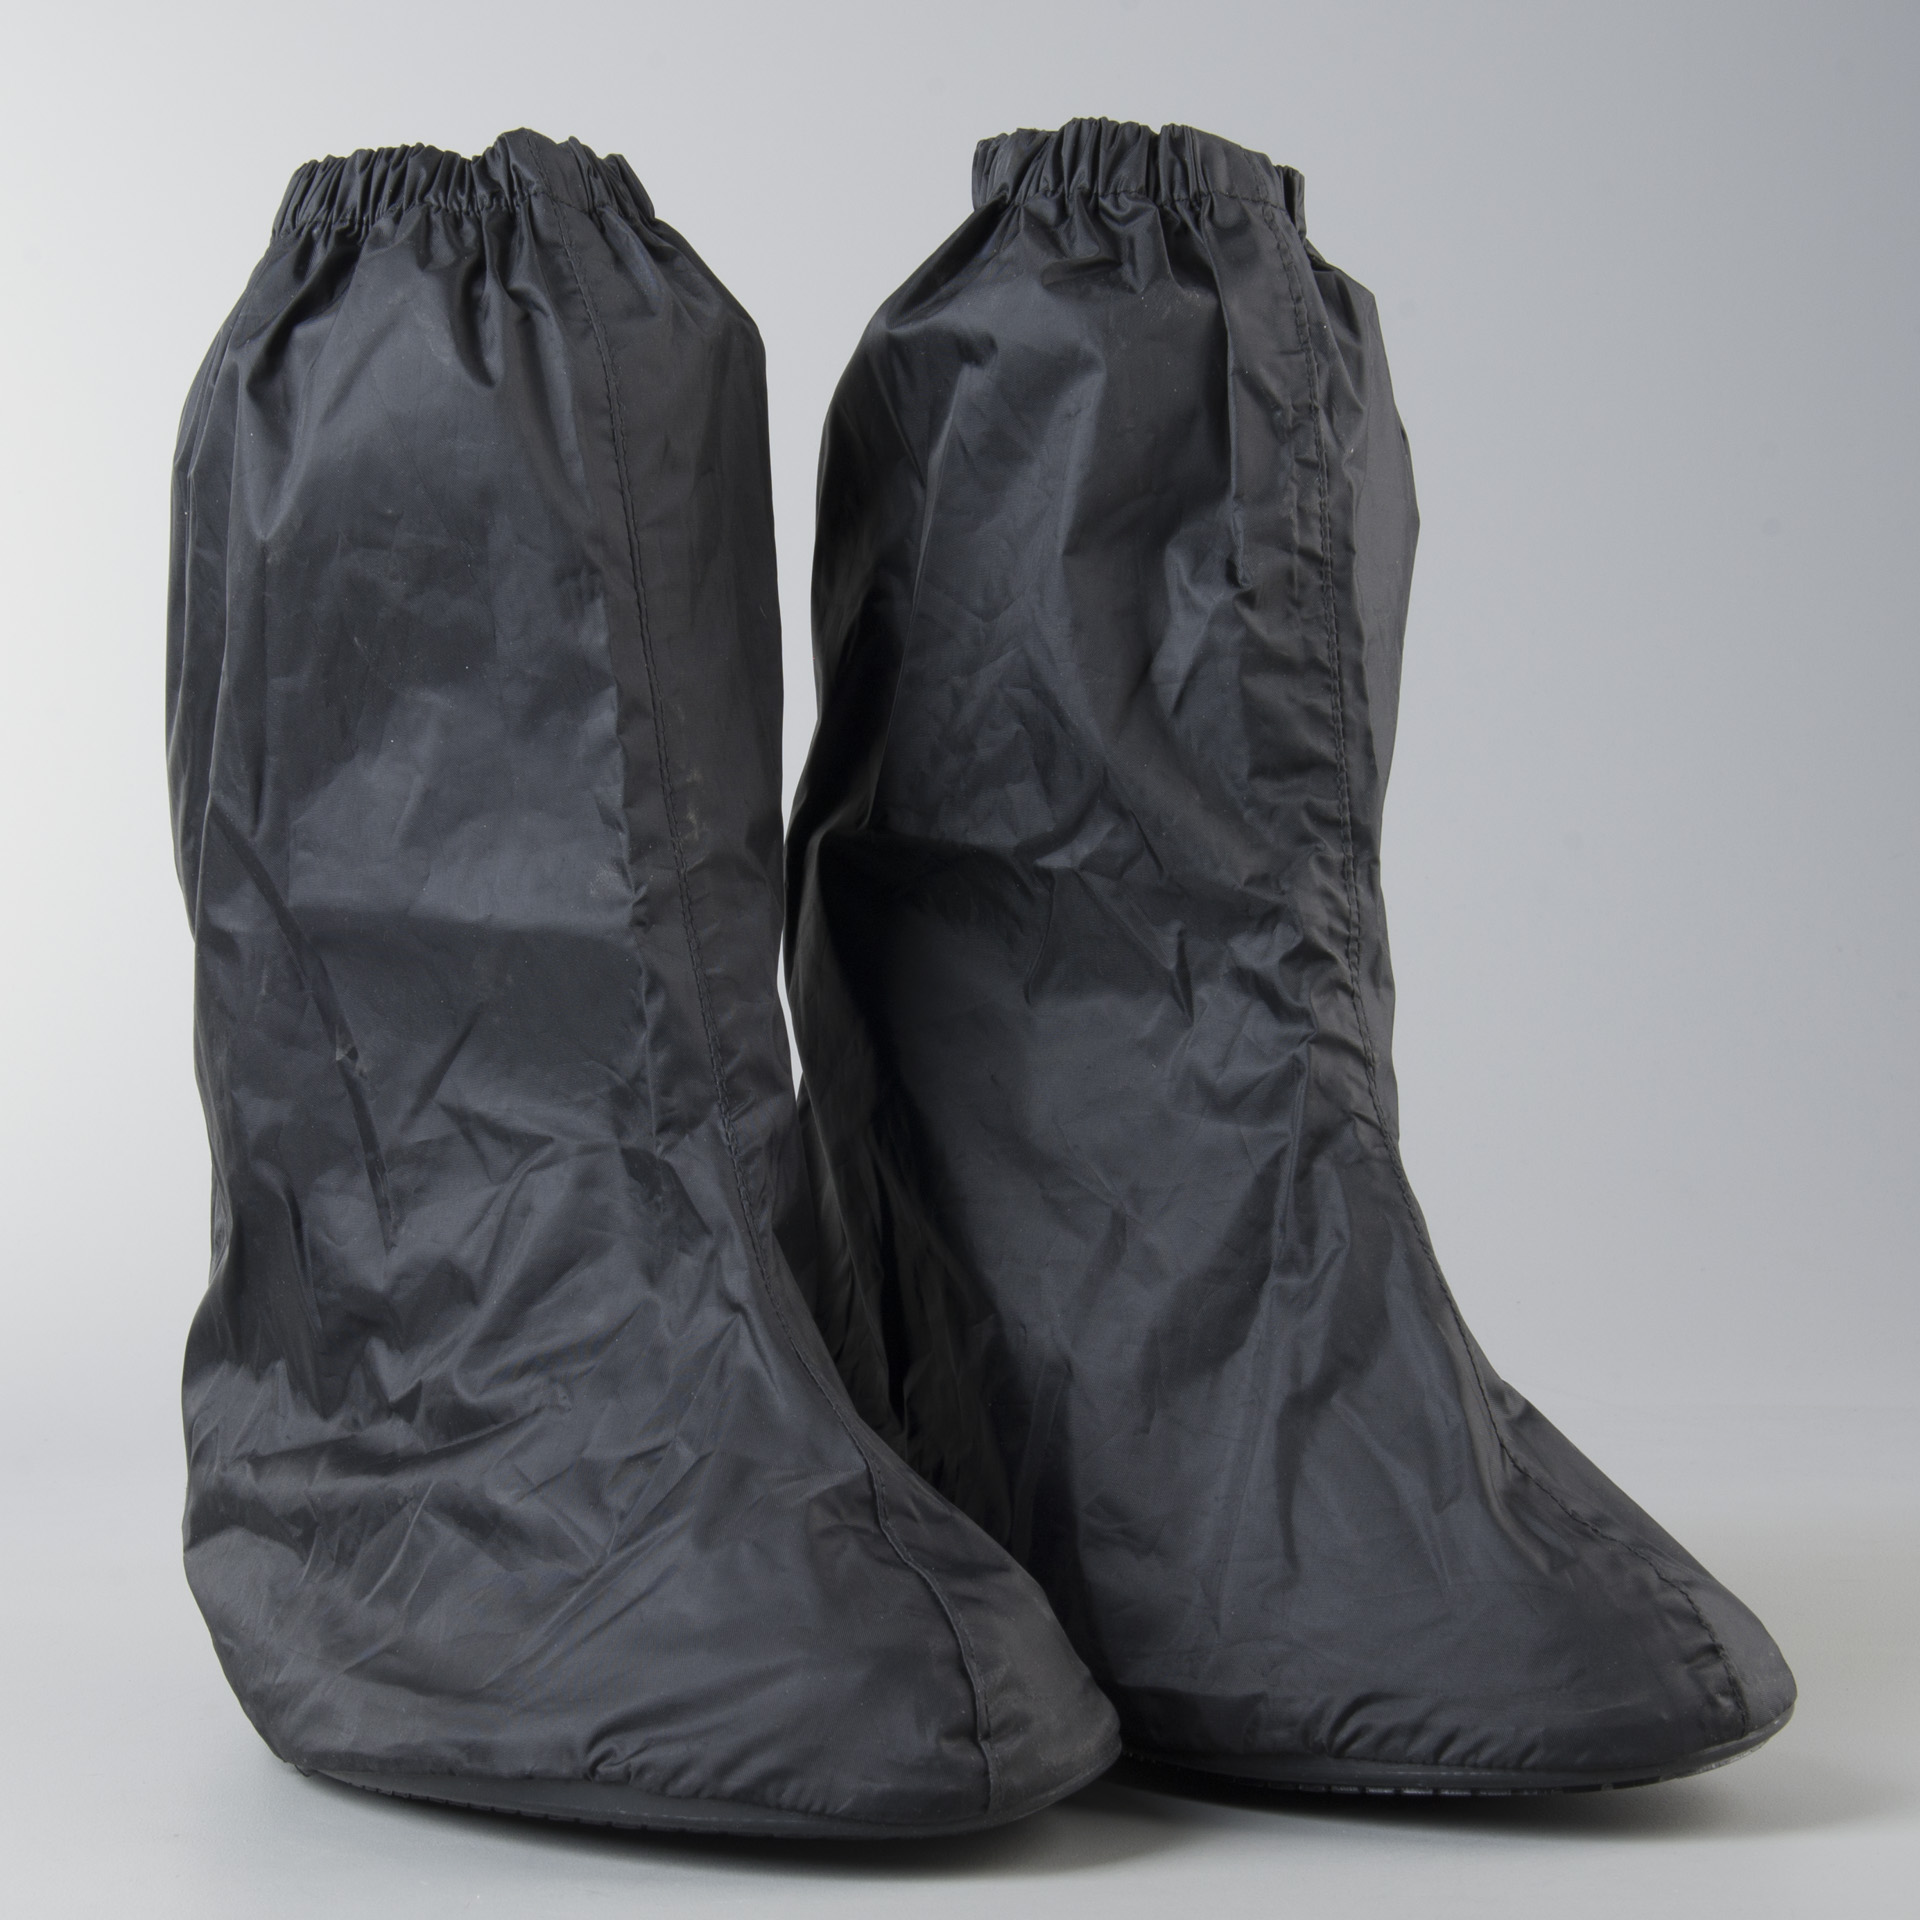 boots rain cover